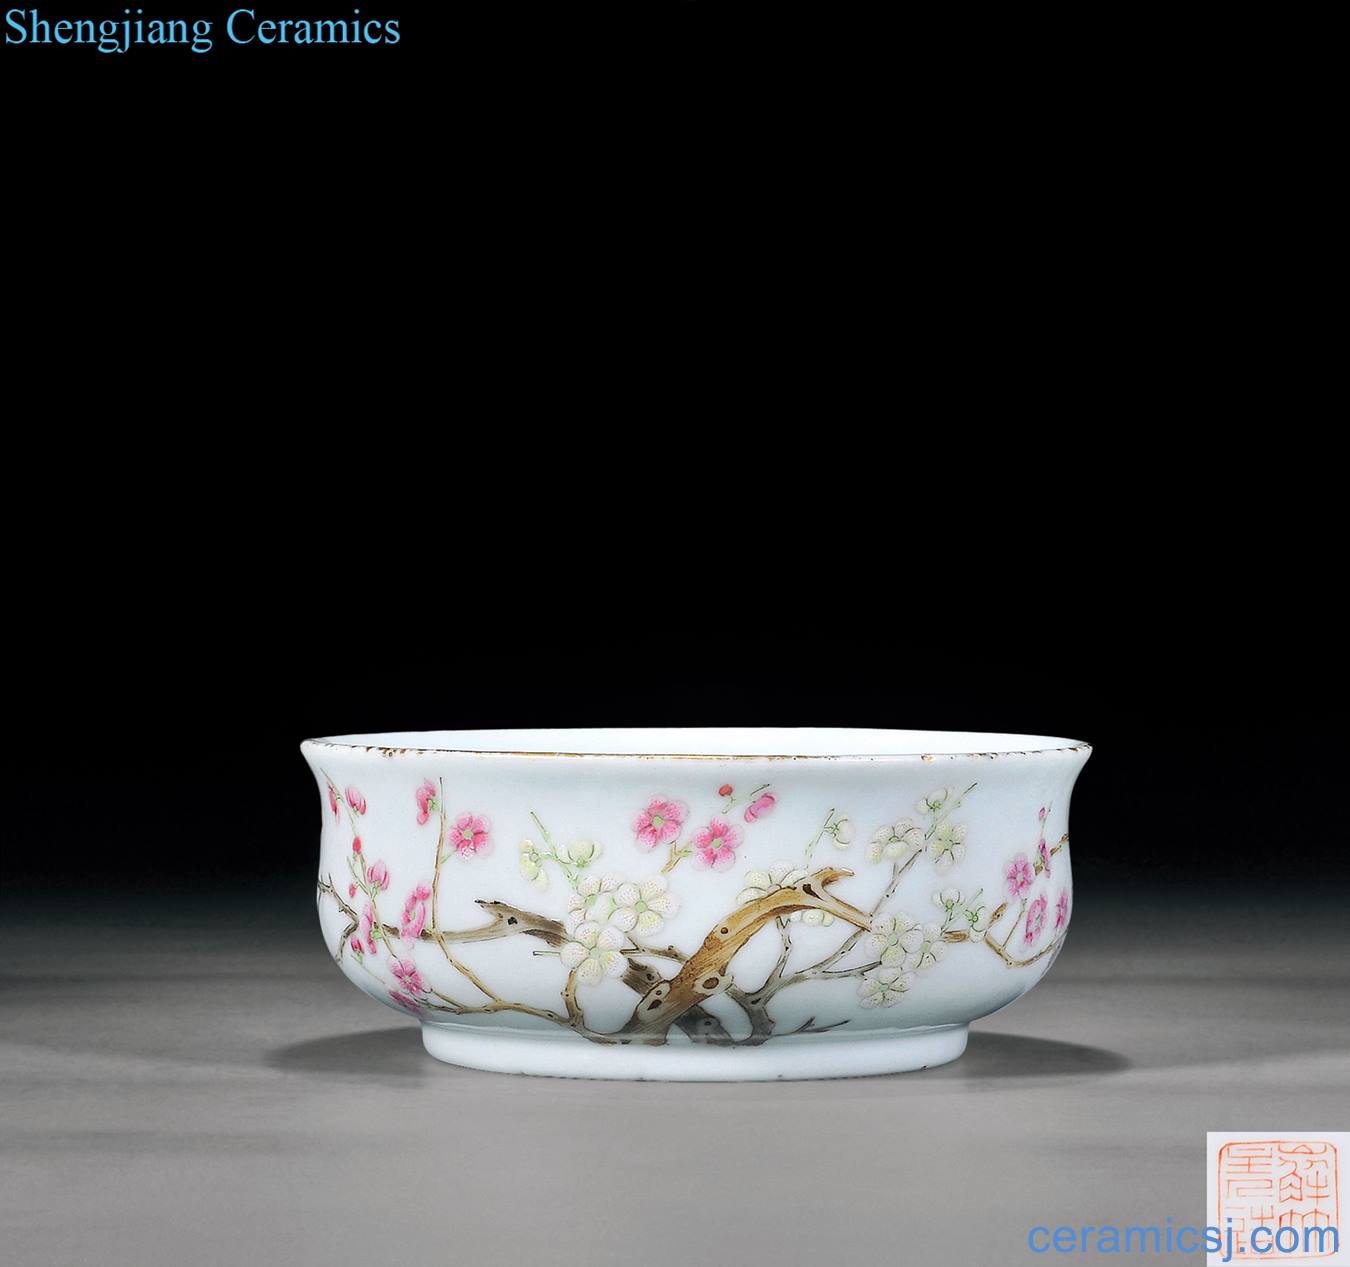 Clear light pastel plum flower grain imitation Zagreb ancient Zagreb elegant wooden bowl